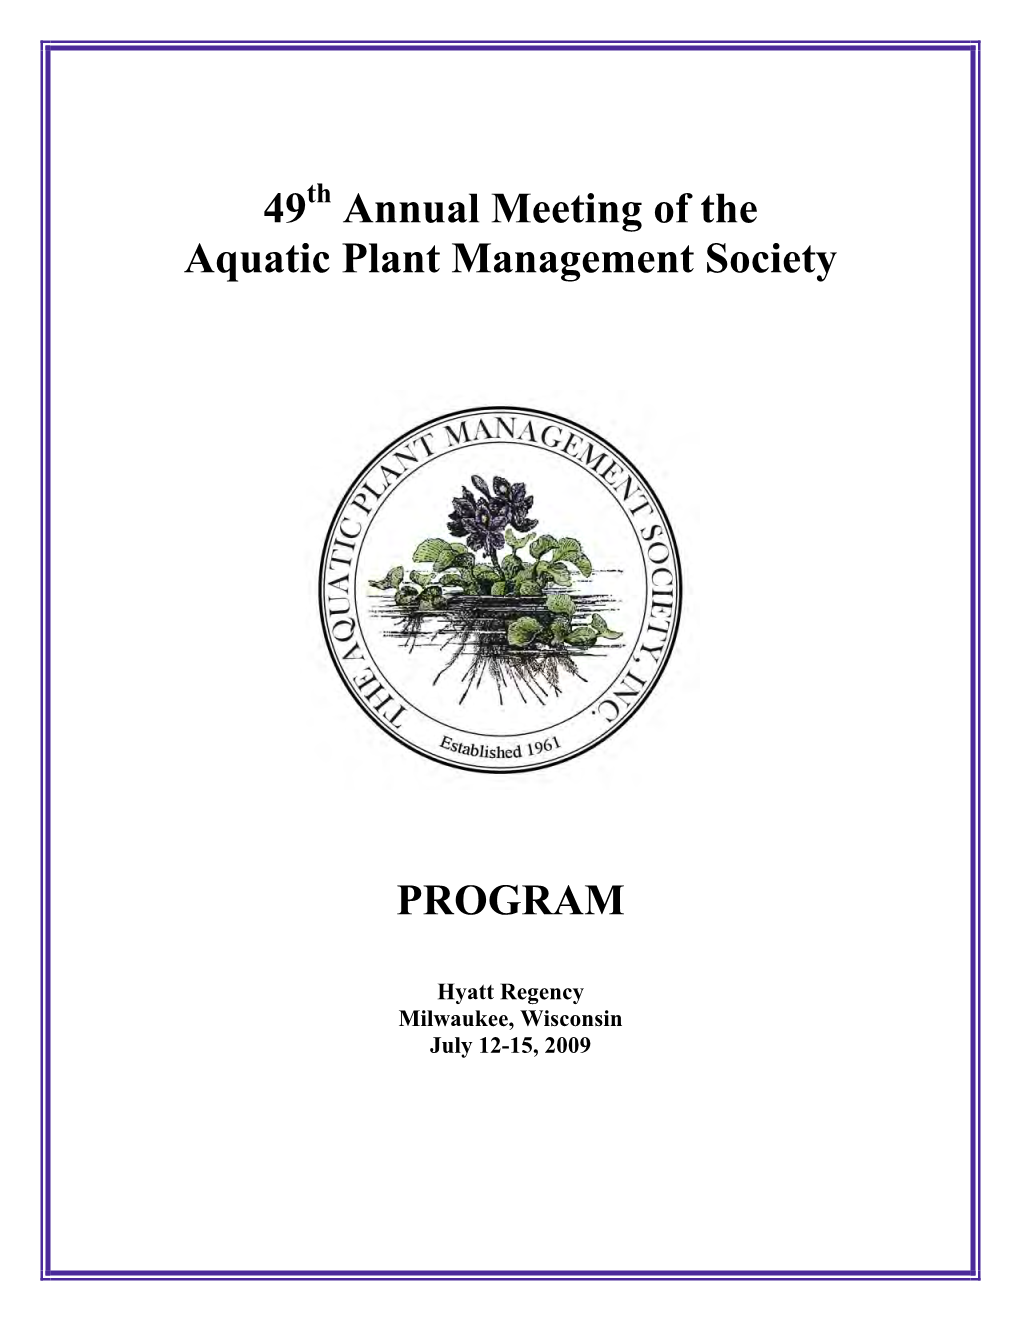 The Aquatic Plant Management Society, Inc